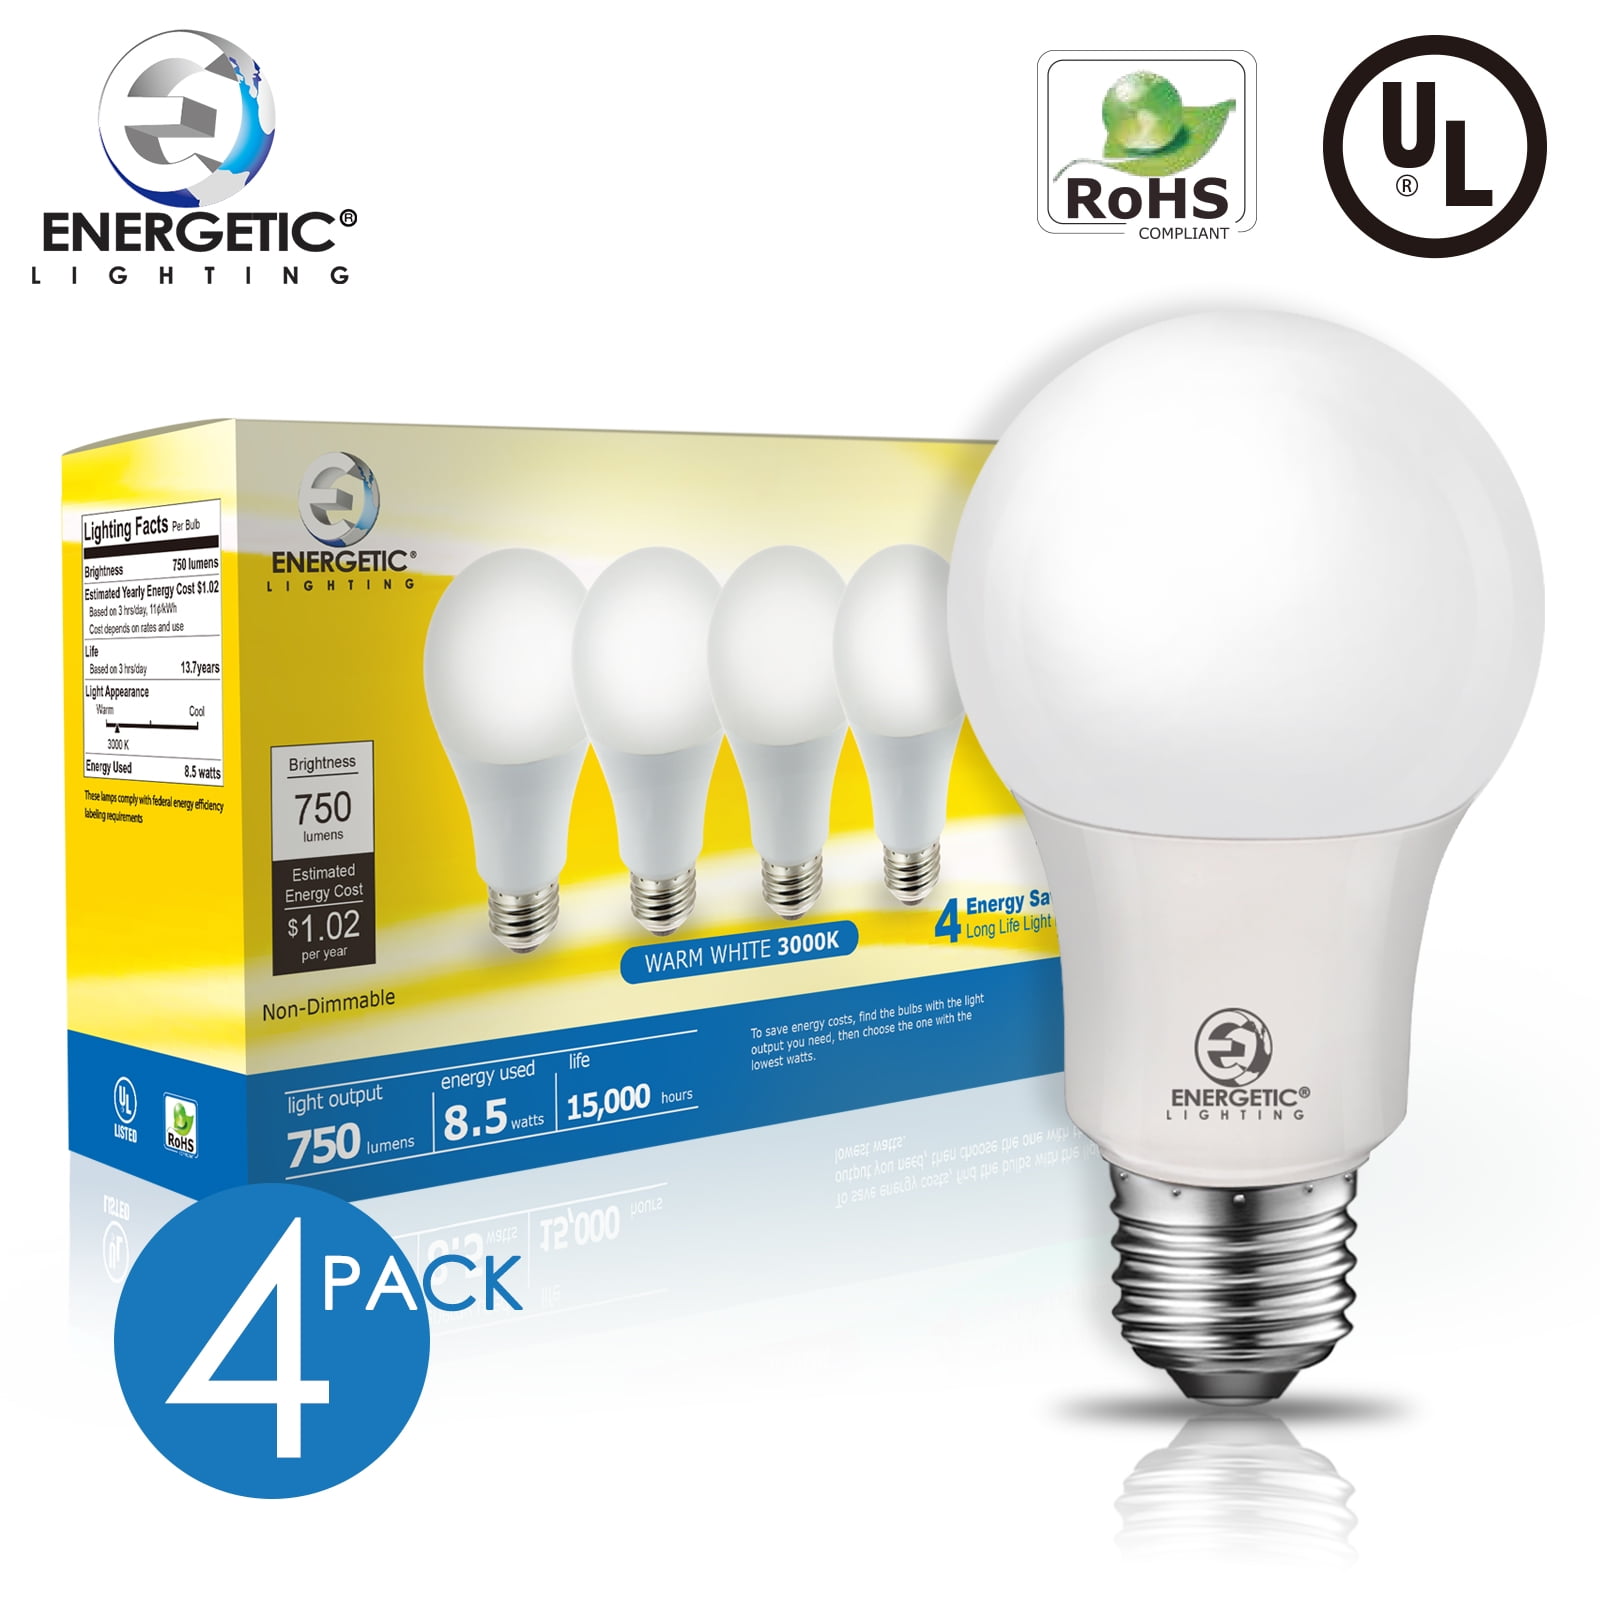 Non-Dimmable LED Light Bulb,750lm,UL Listed 16-Pack E26 Medium Base A19 LED Light Bulb 5000K Daylight 60W Equivalent 